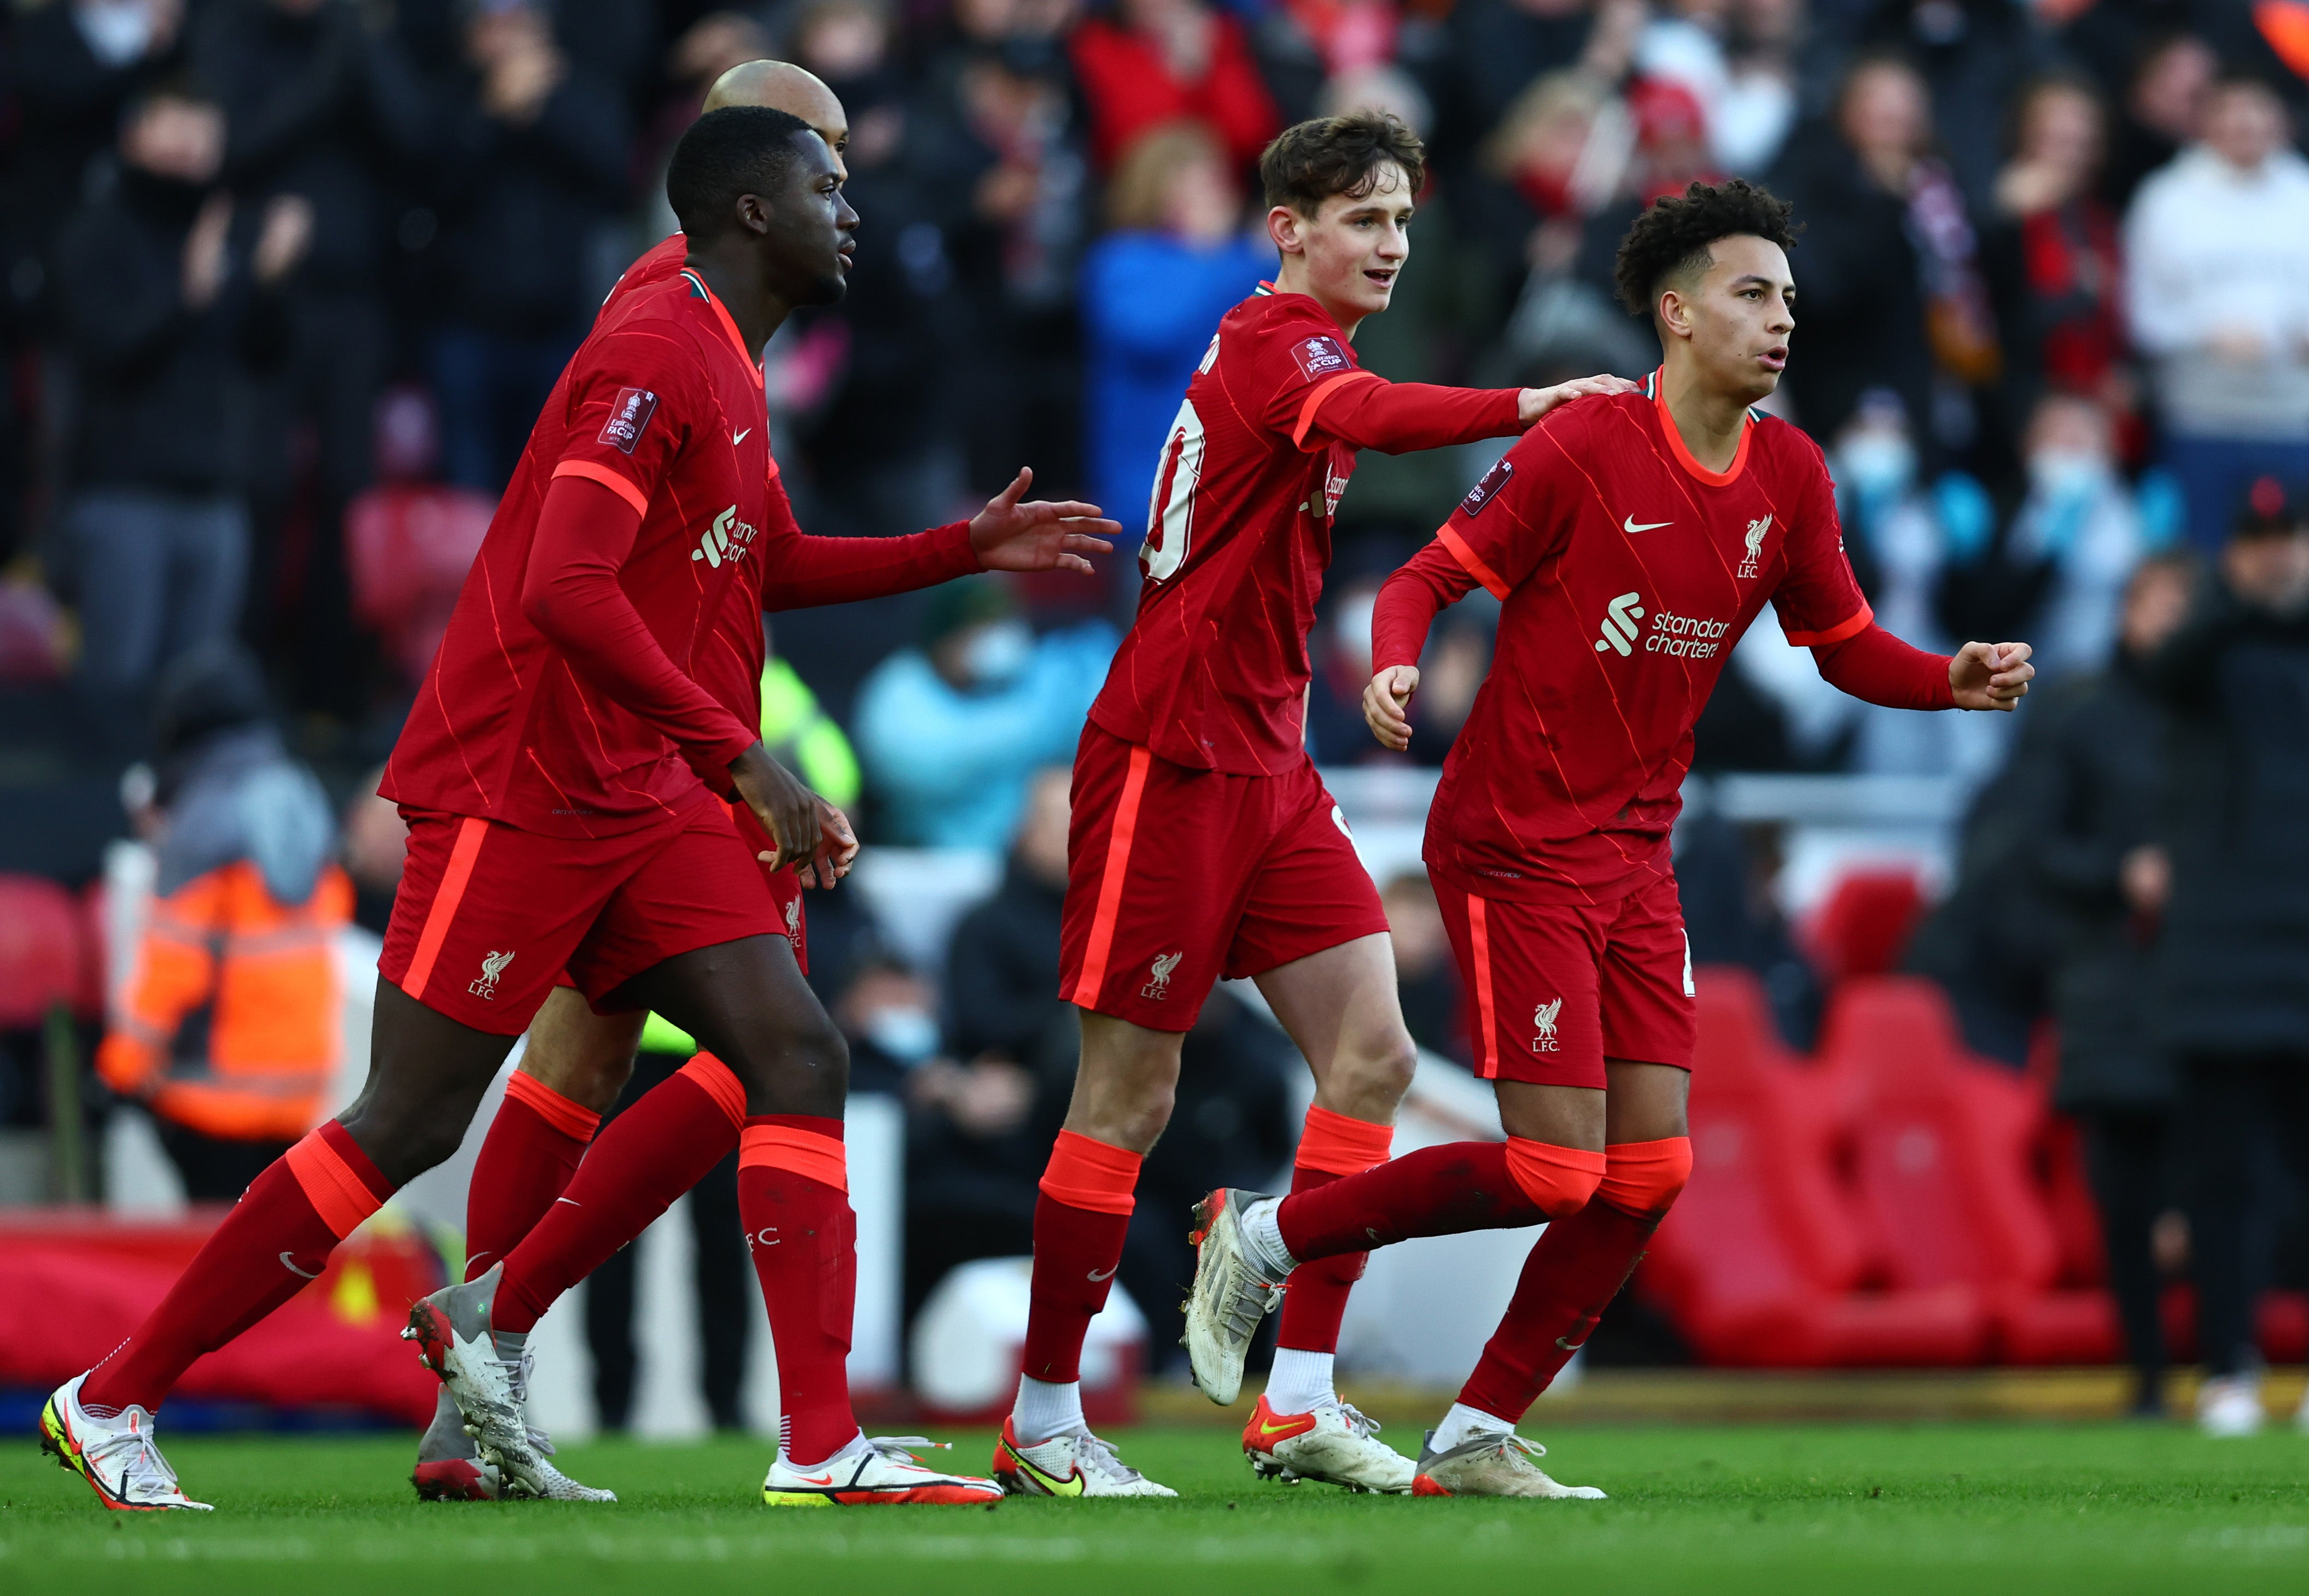 Kaide Gordon pulled Liverpool level after Shrewsbury threatened an upset